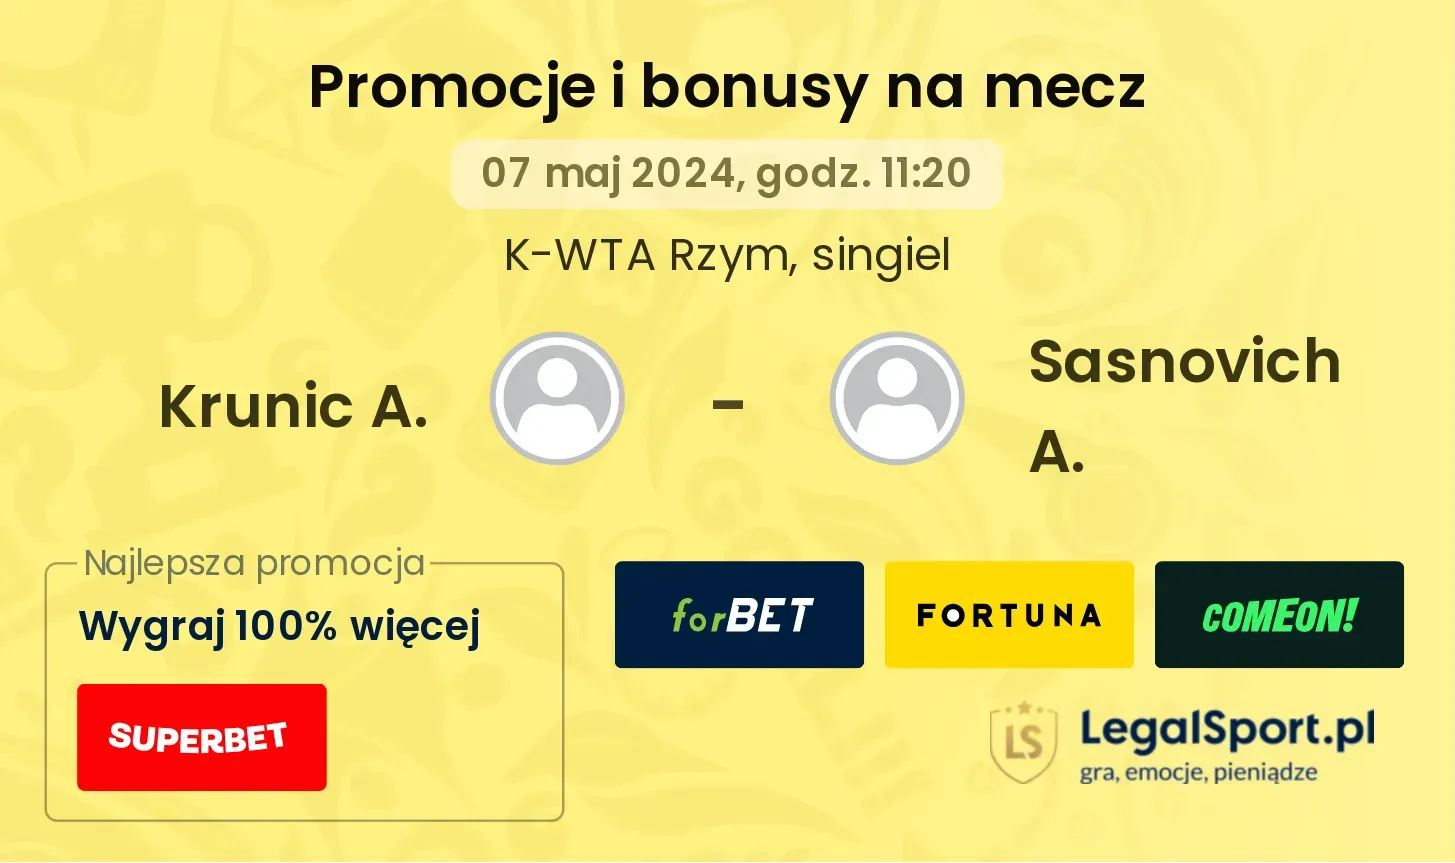 Krunic A. - Sasnovich A. promocje bonusy na mecz